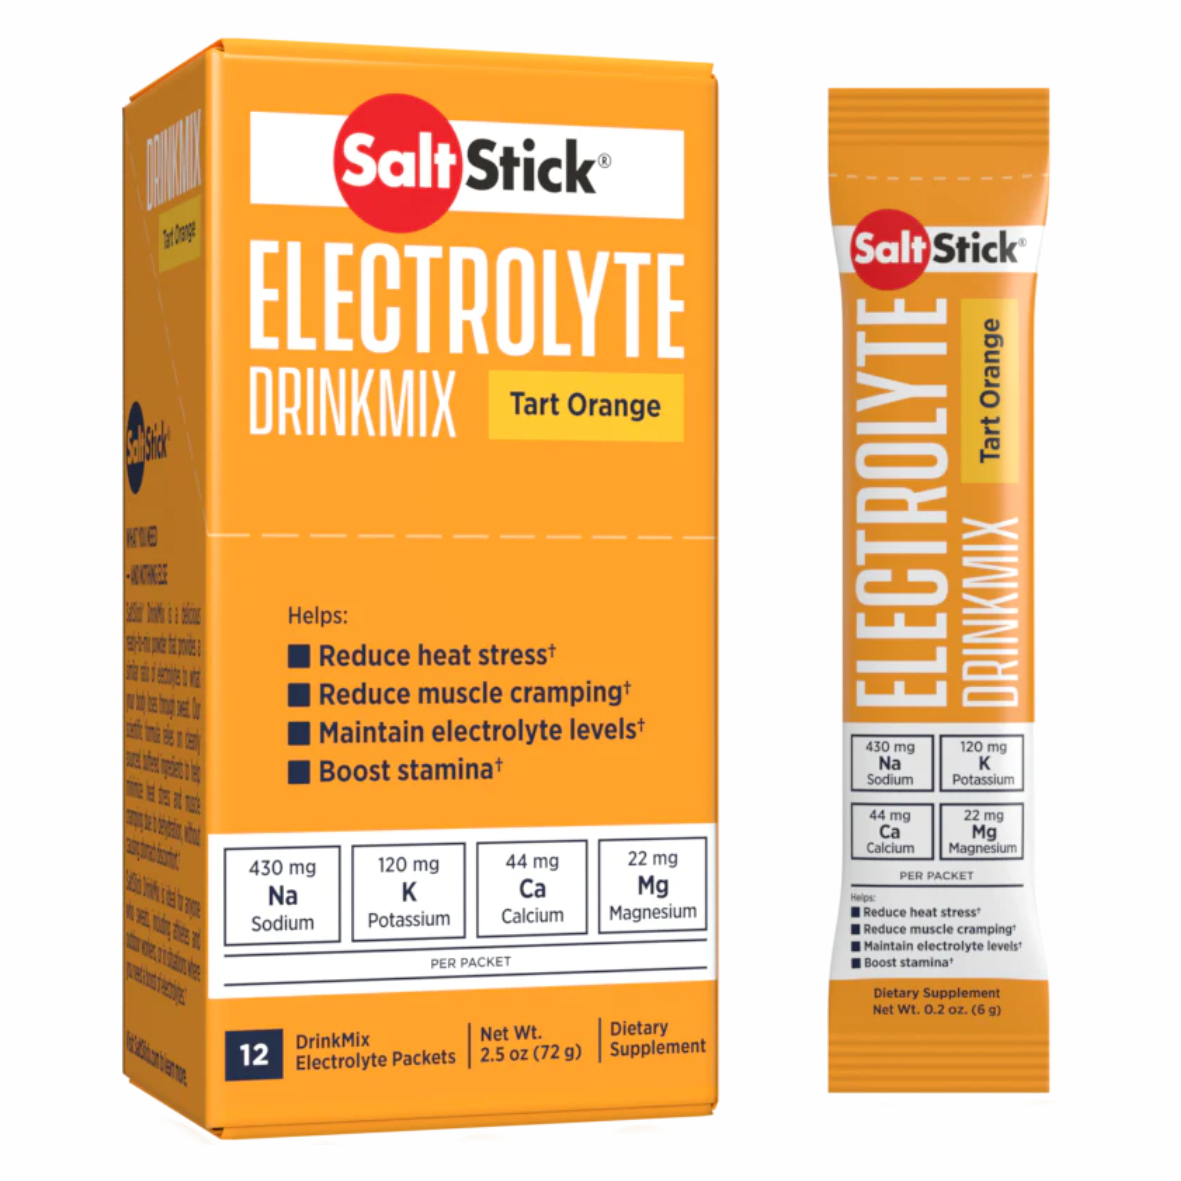 SaltStick Electrolyte Drink Mix Tart Orange flavour